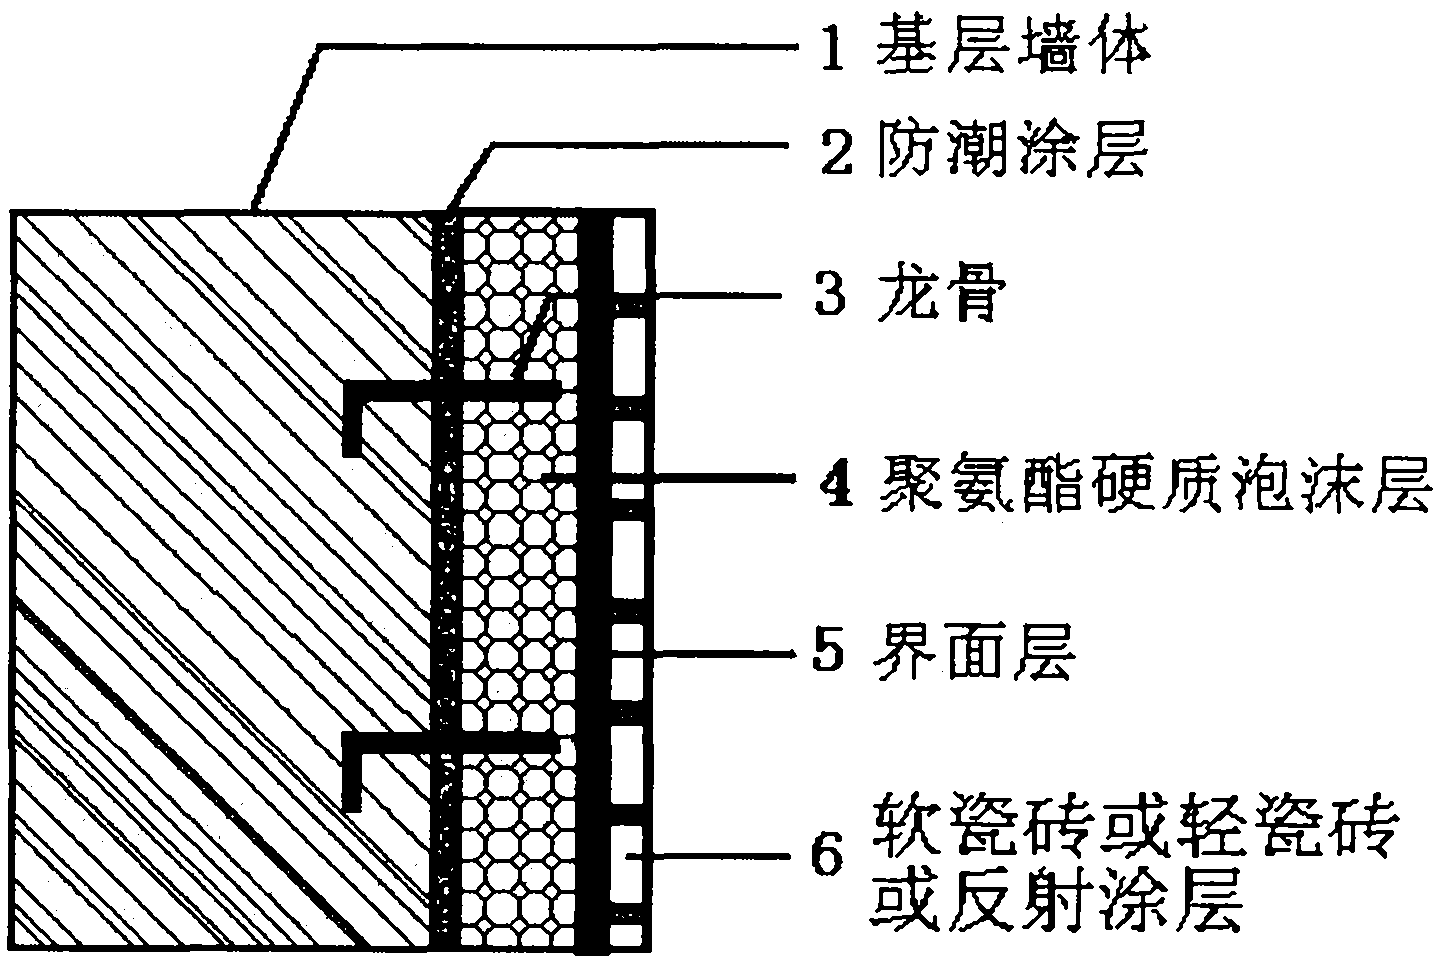 High flame retardant polyurethane rigid foam outer wall thermal insulation system